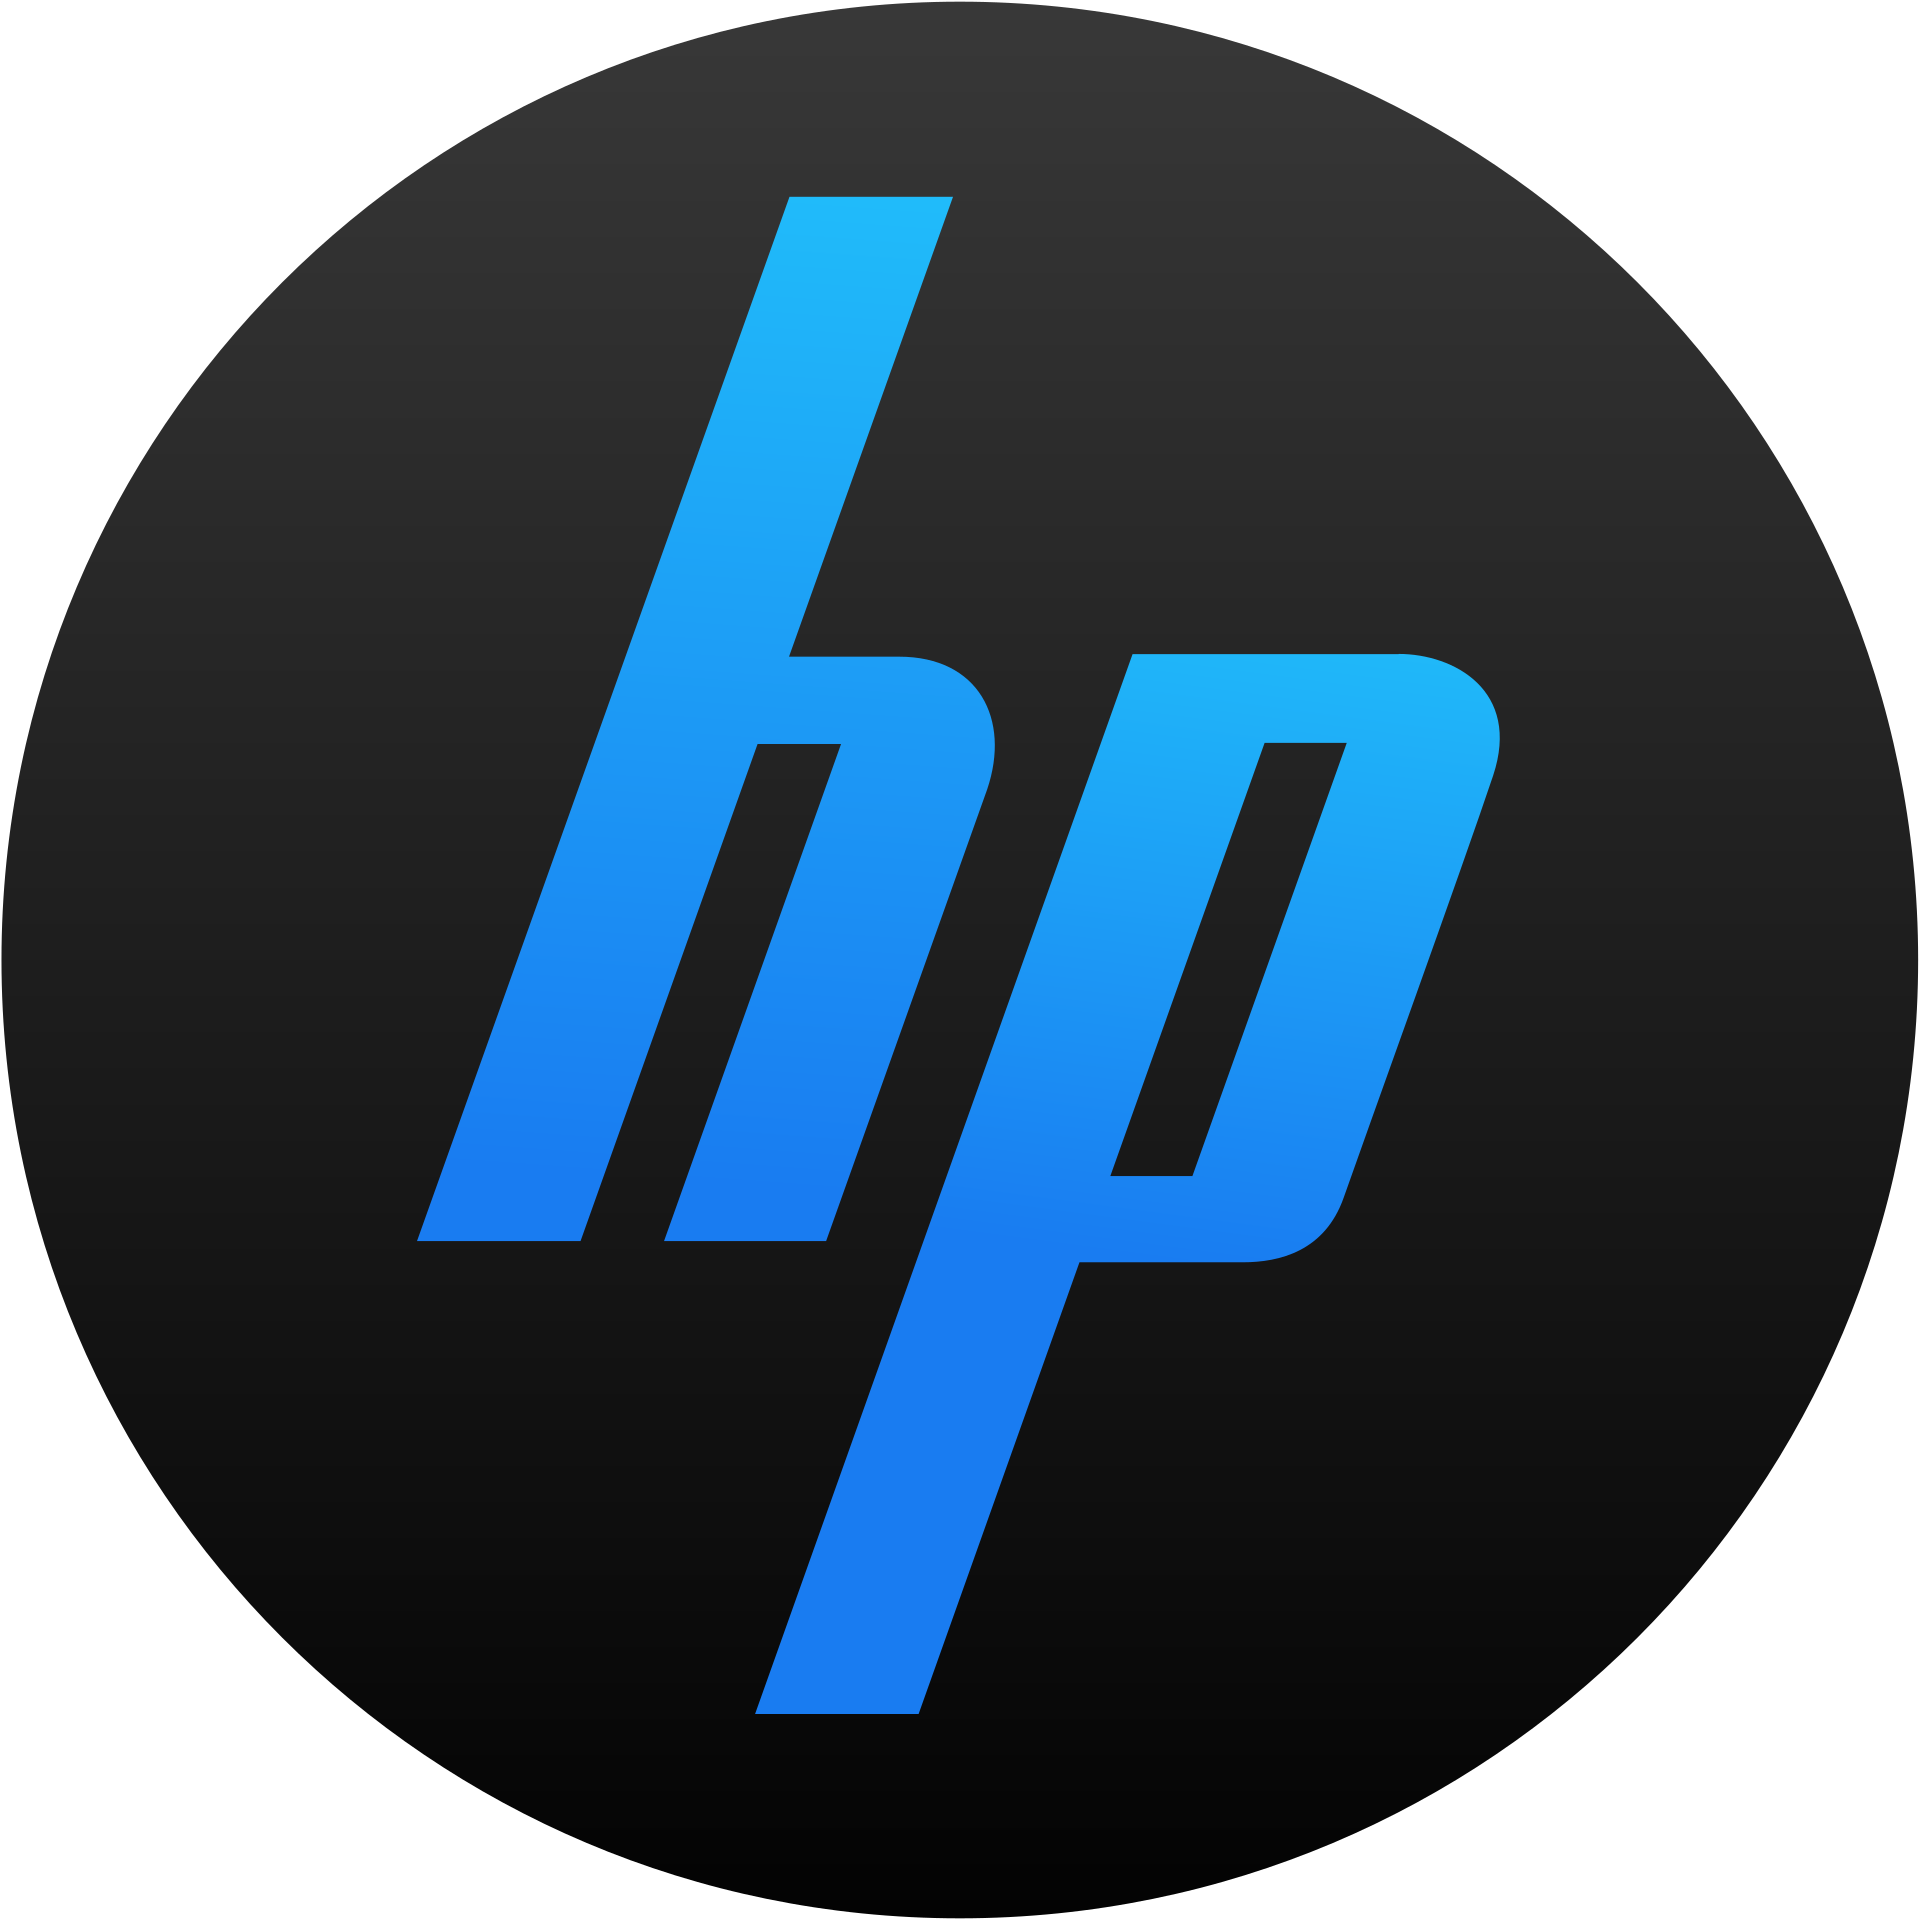 H P Logo Blueon Black Background PNG image